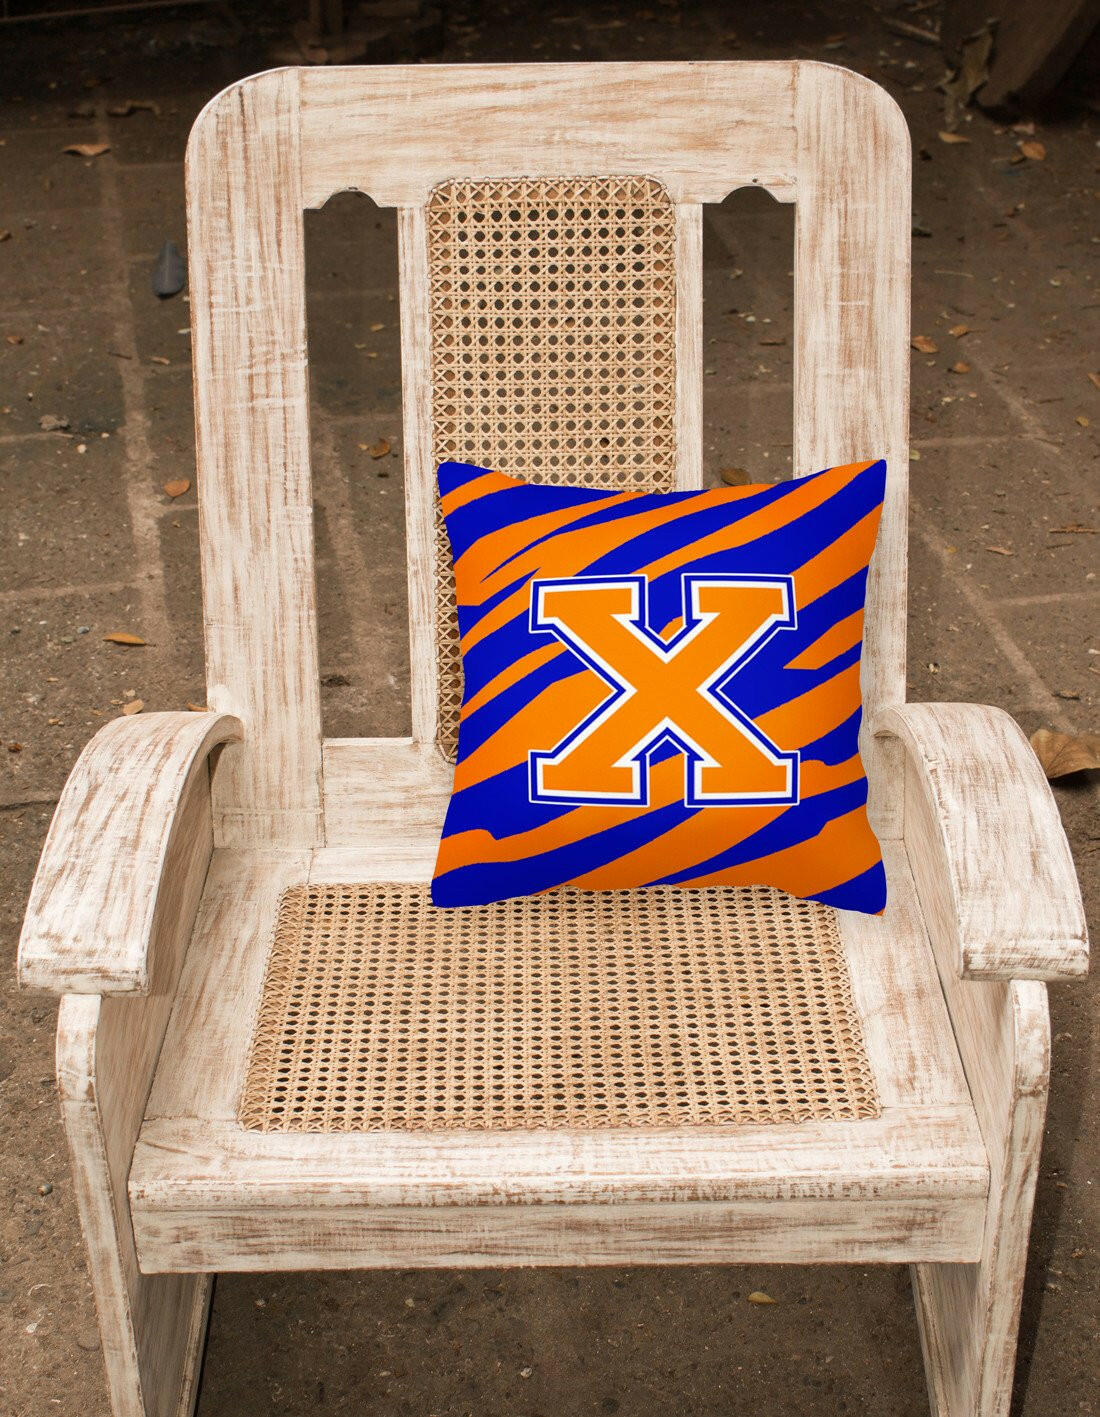 Monogram Initial X Tiger Stripe - Blue Orange Decorative   Canvas Fabric Pillow - the-store.com